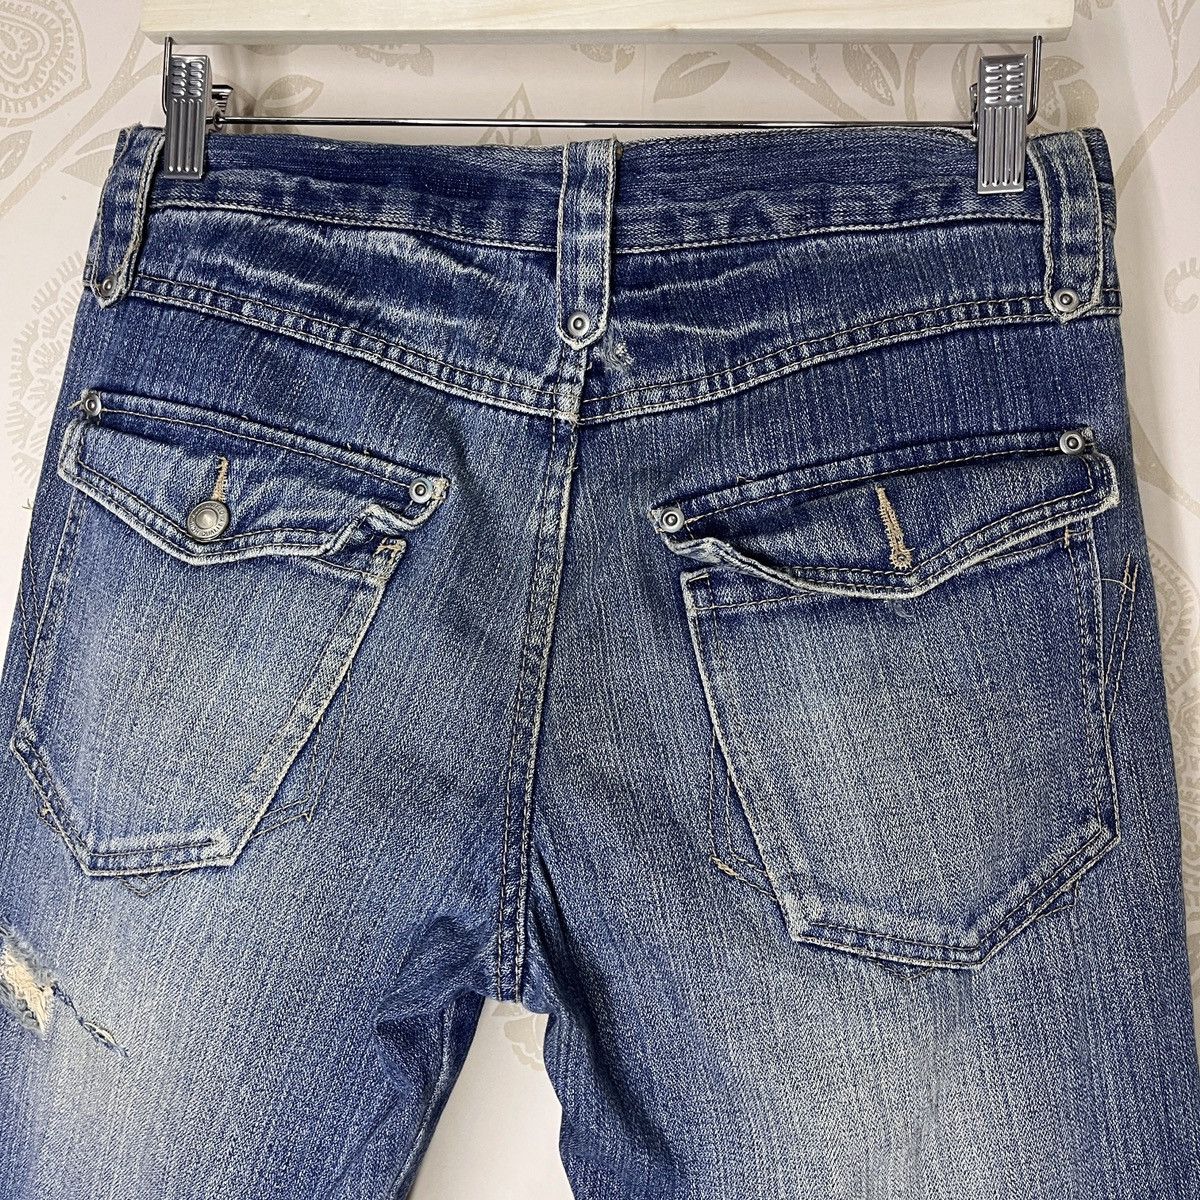 Ripped Three Stones Throw Denim Jeans Avant Garde Pockets - 21